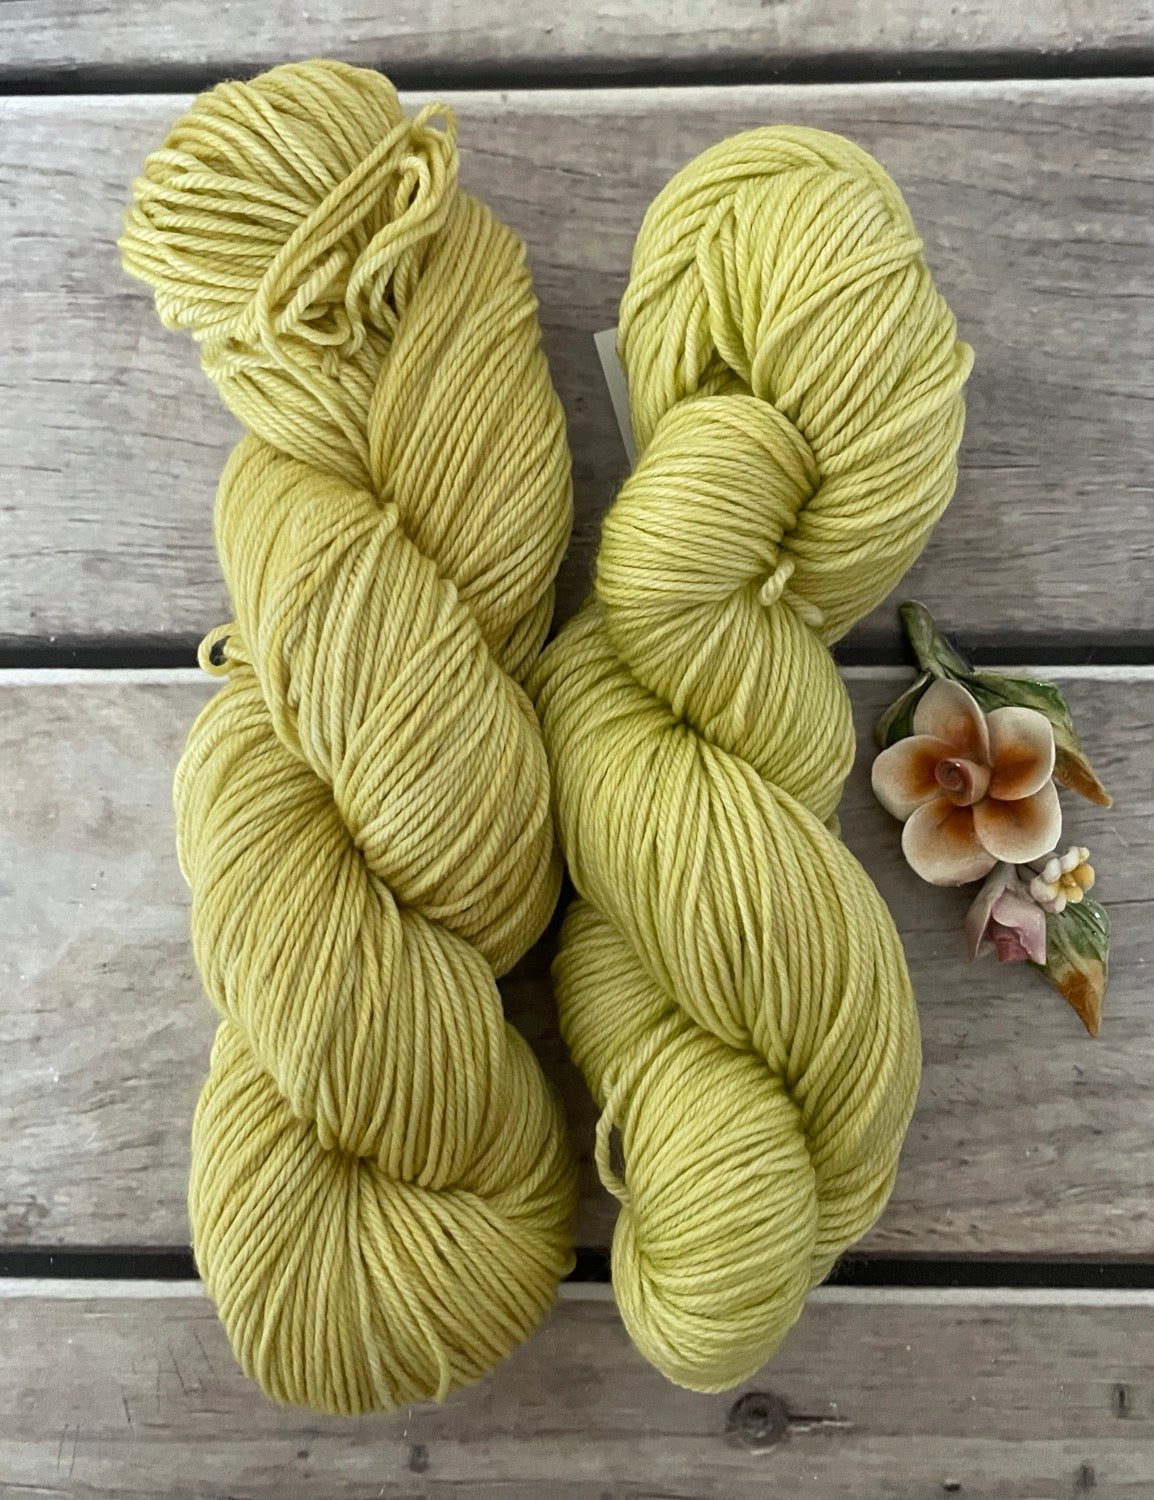 New Beginnings - on 8 ply merino and nylon sock yarn